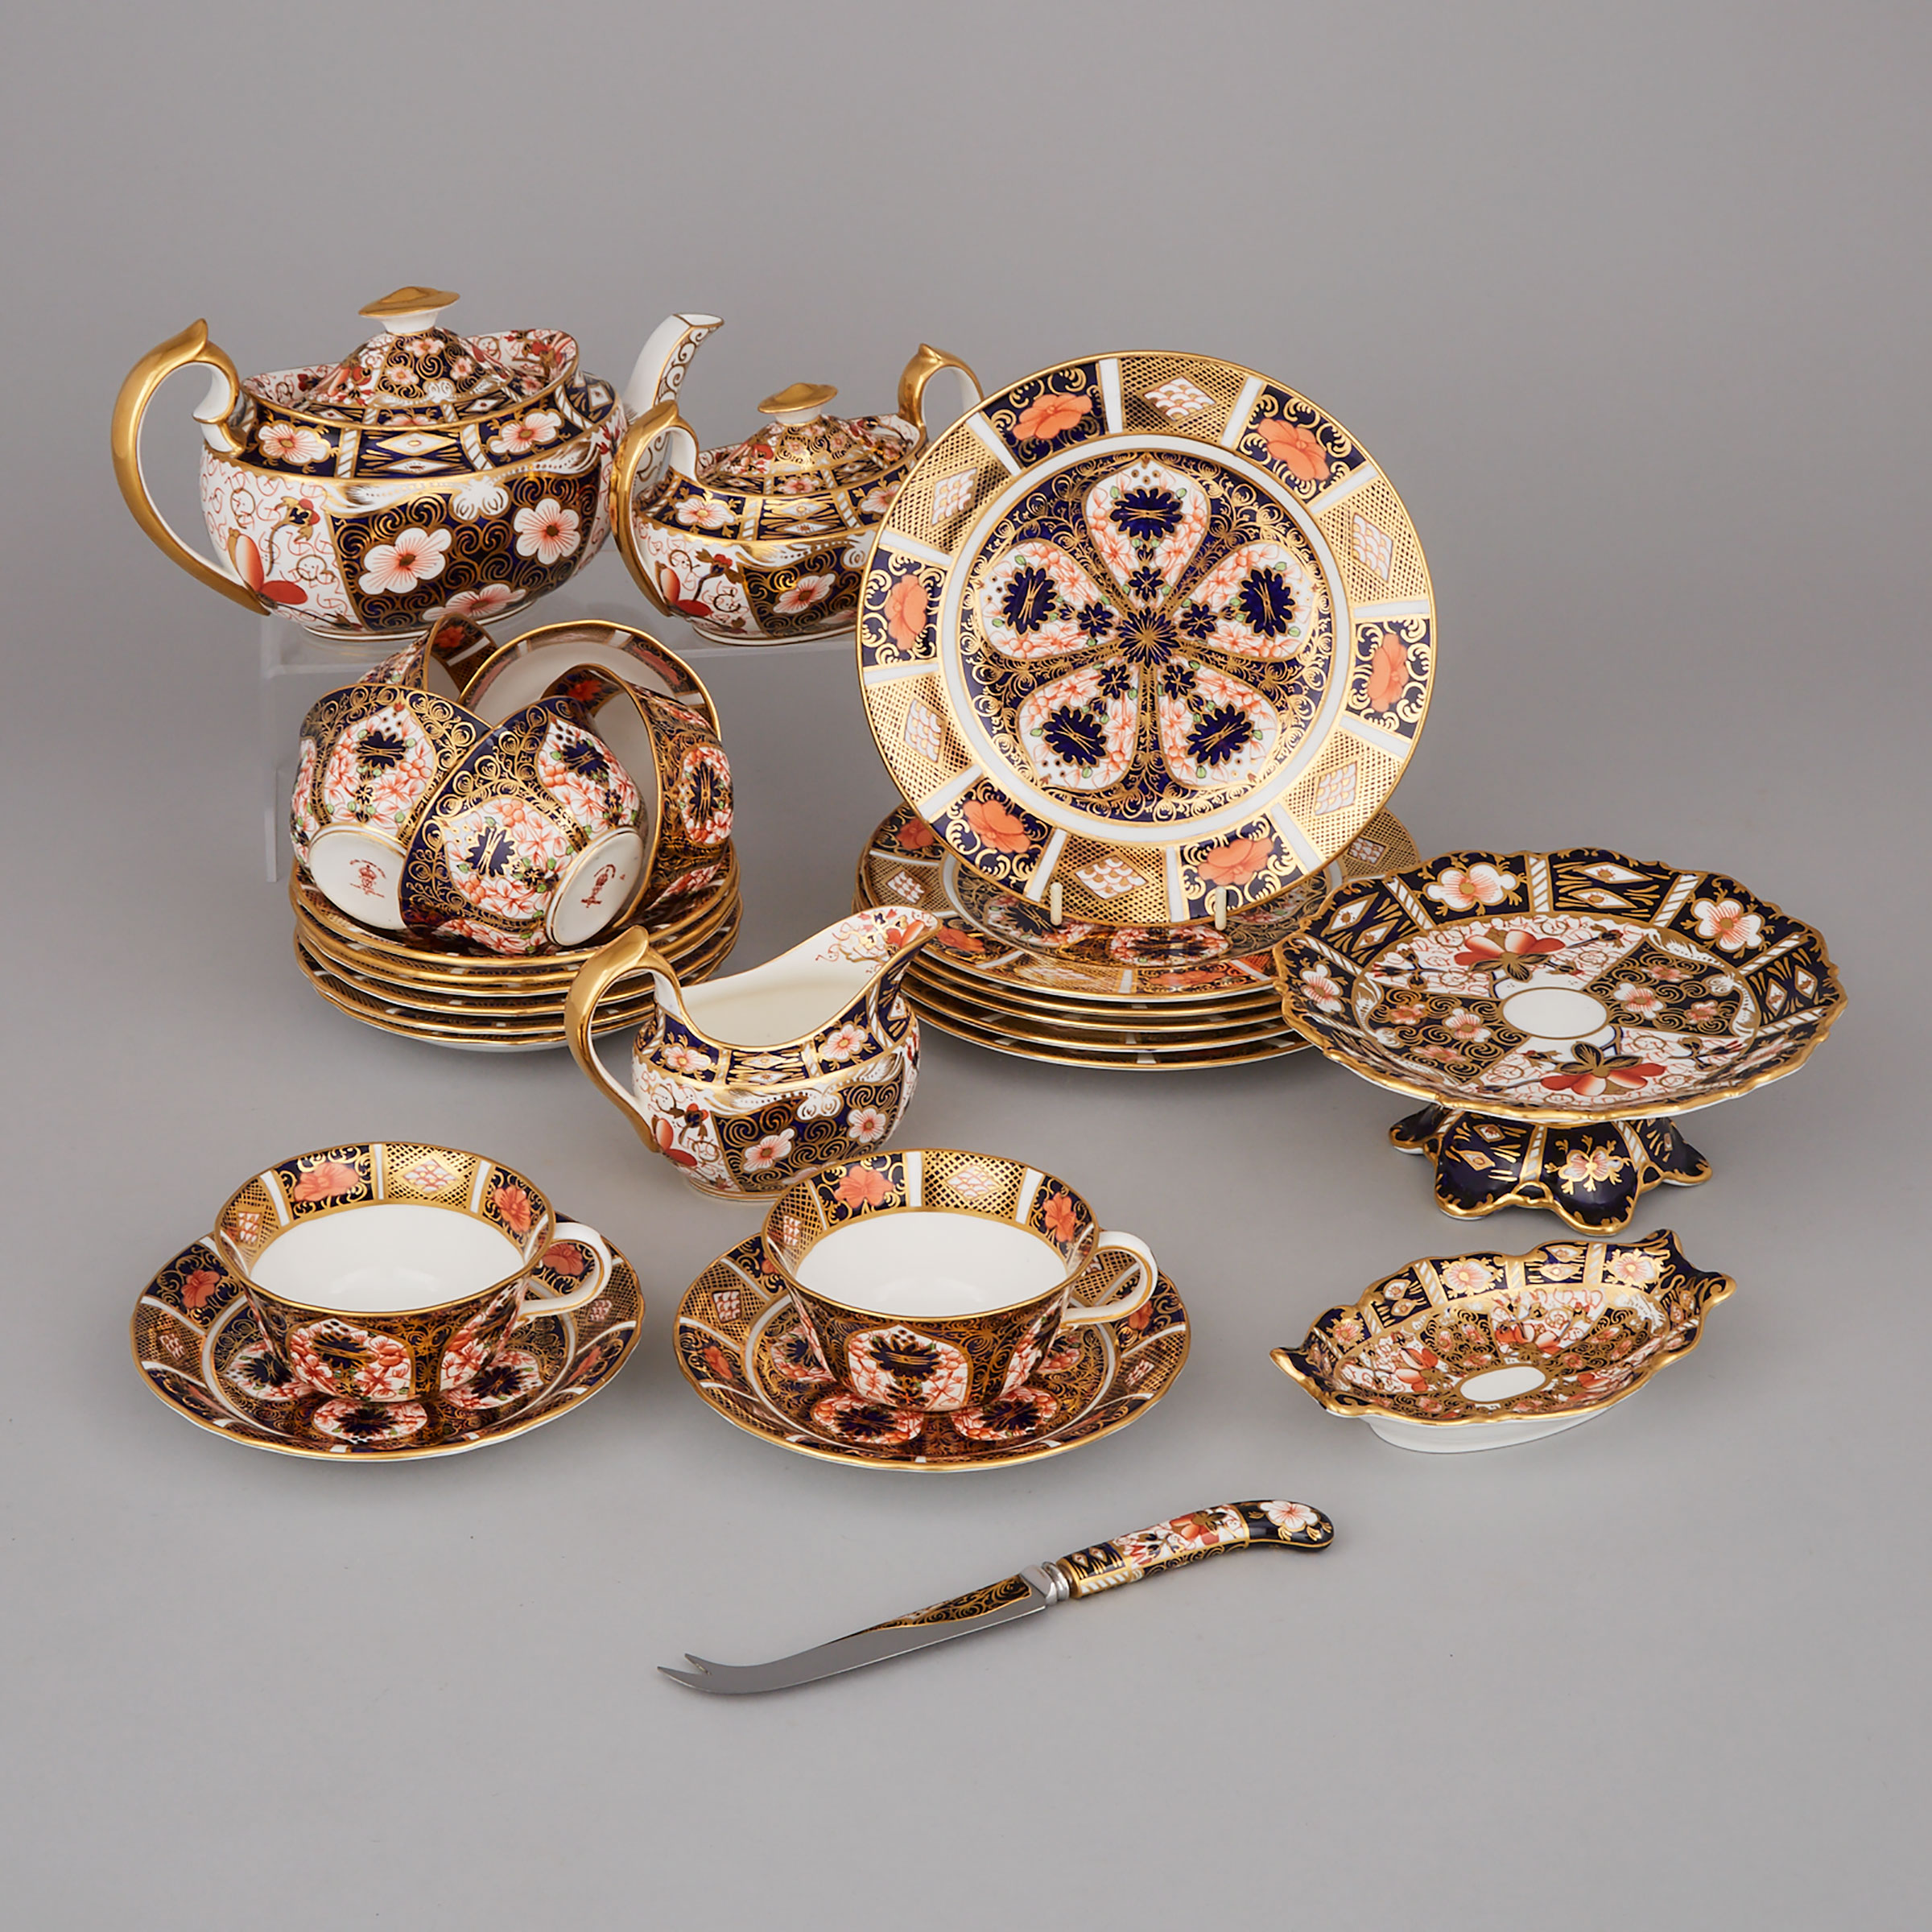 Group of Royal Crown Derby ‘Old Imari’ (1128) and ‘Imari’ (2451) Pattern Tablewares, 20th century